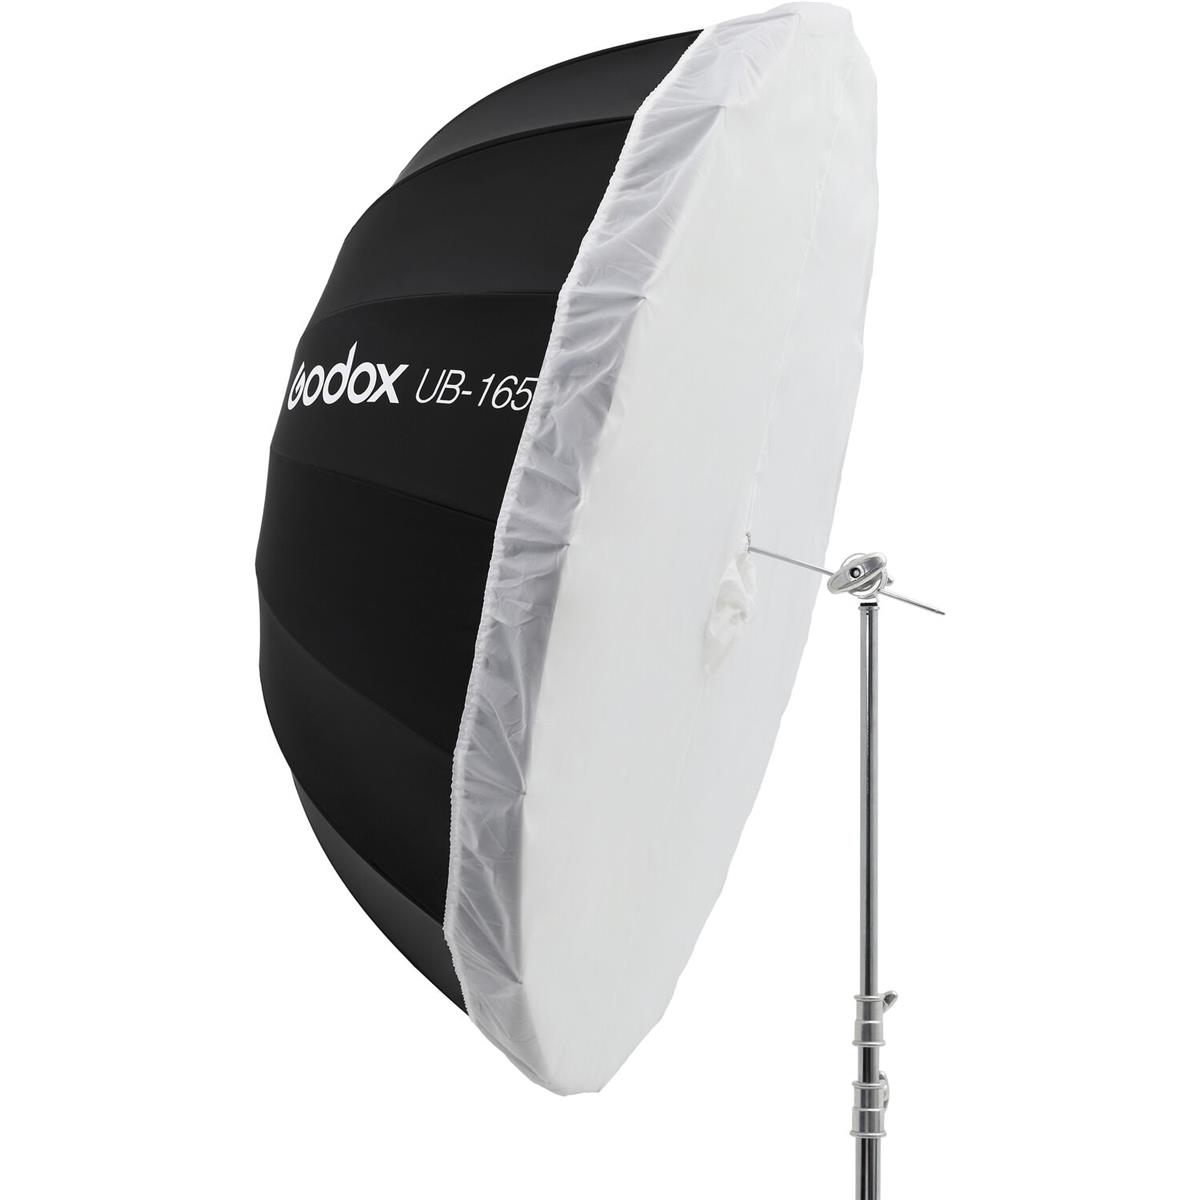 Godox DPU-165T Diffuser for 165cm Parabolic Umbrellas